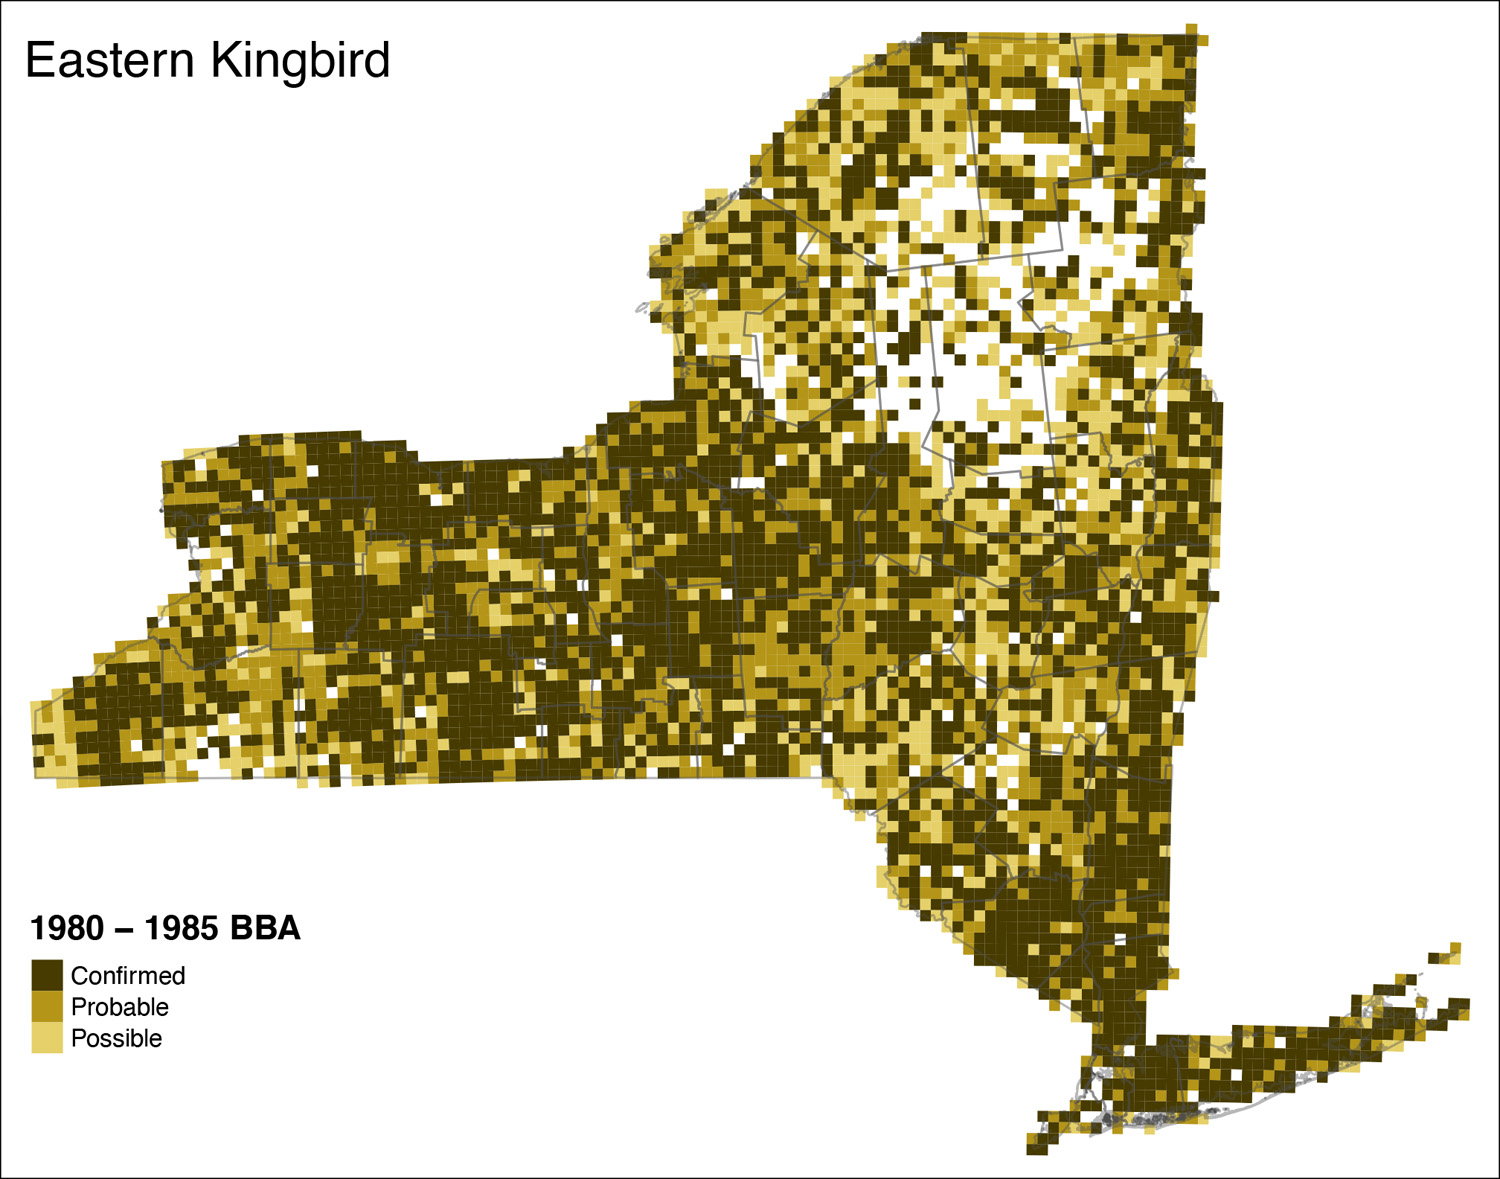 Eastern Kingbird Atlas 1 Distribution